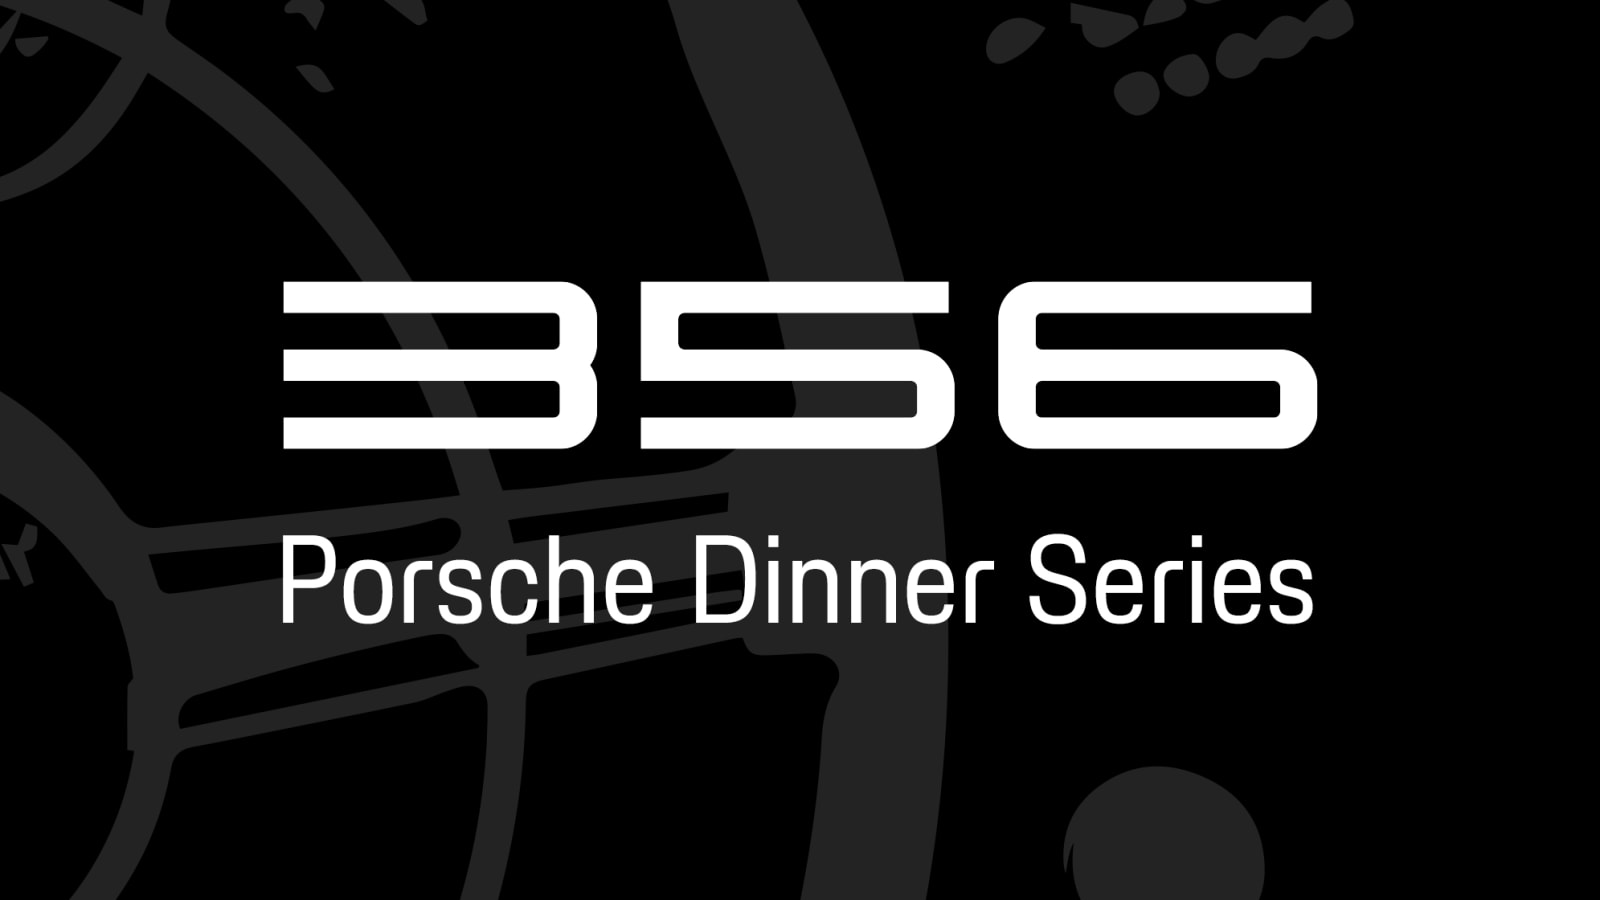 356 Porsche Dinner Series // Travel to Oktoberfest